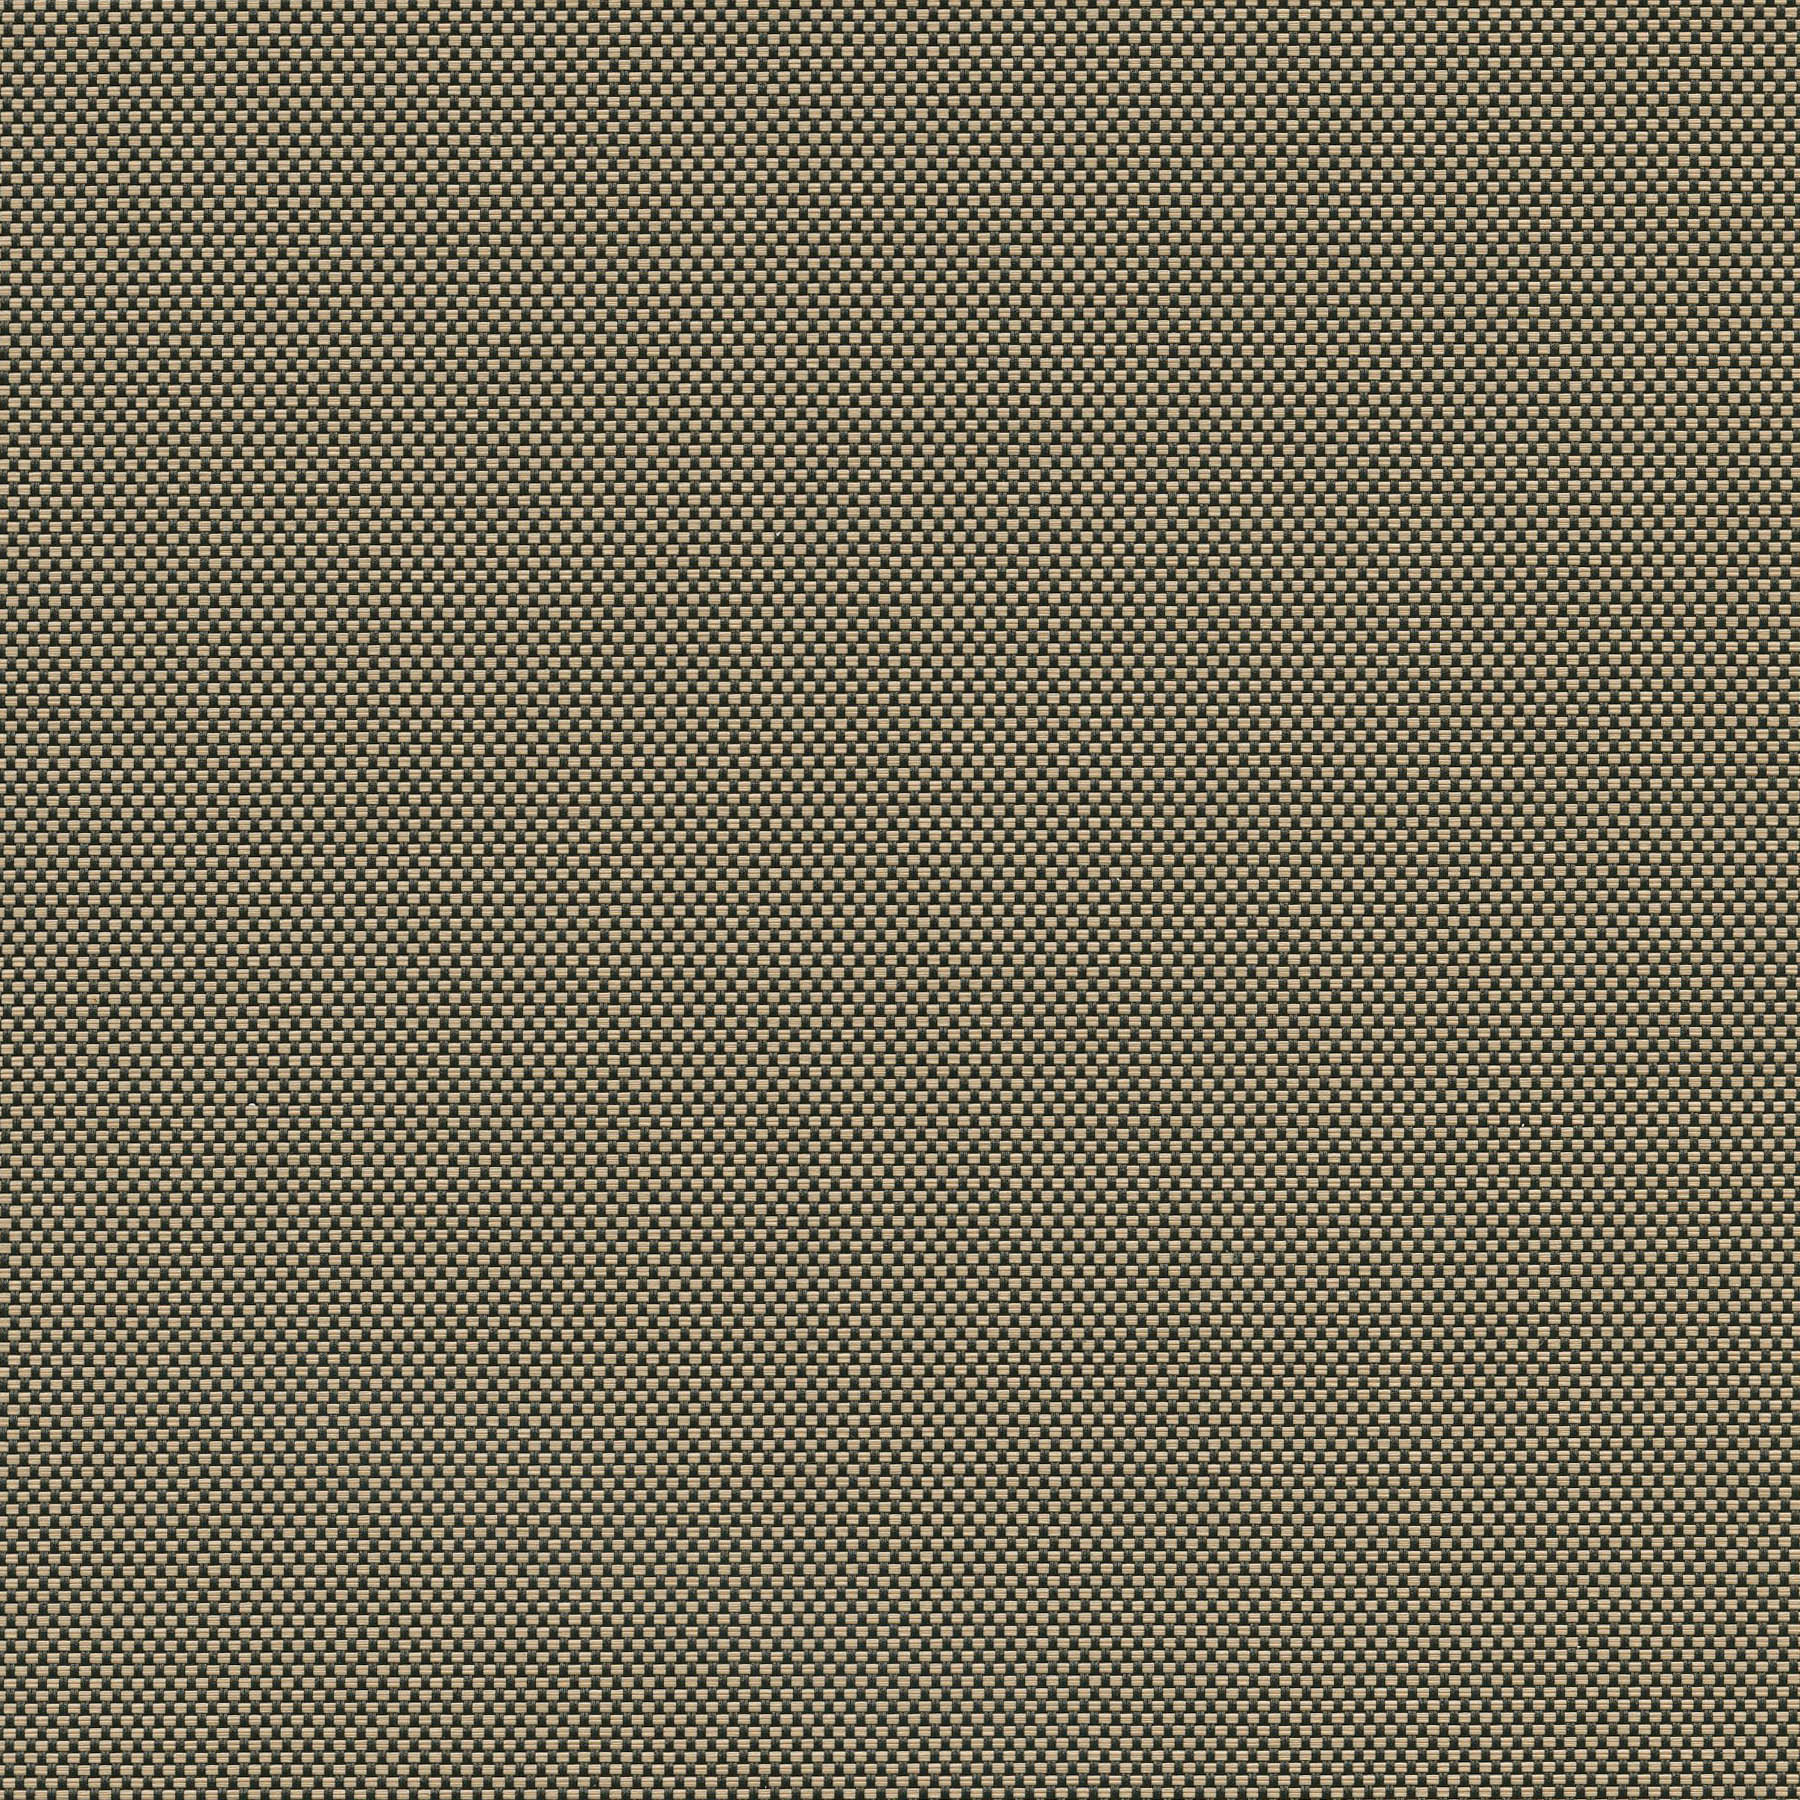 Altex - Fabric - SHEERWEAVE 2410 - Charcoal-Sand - 41V32